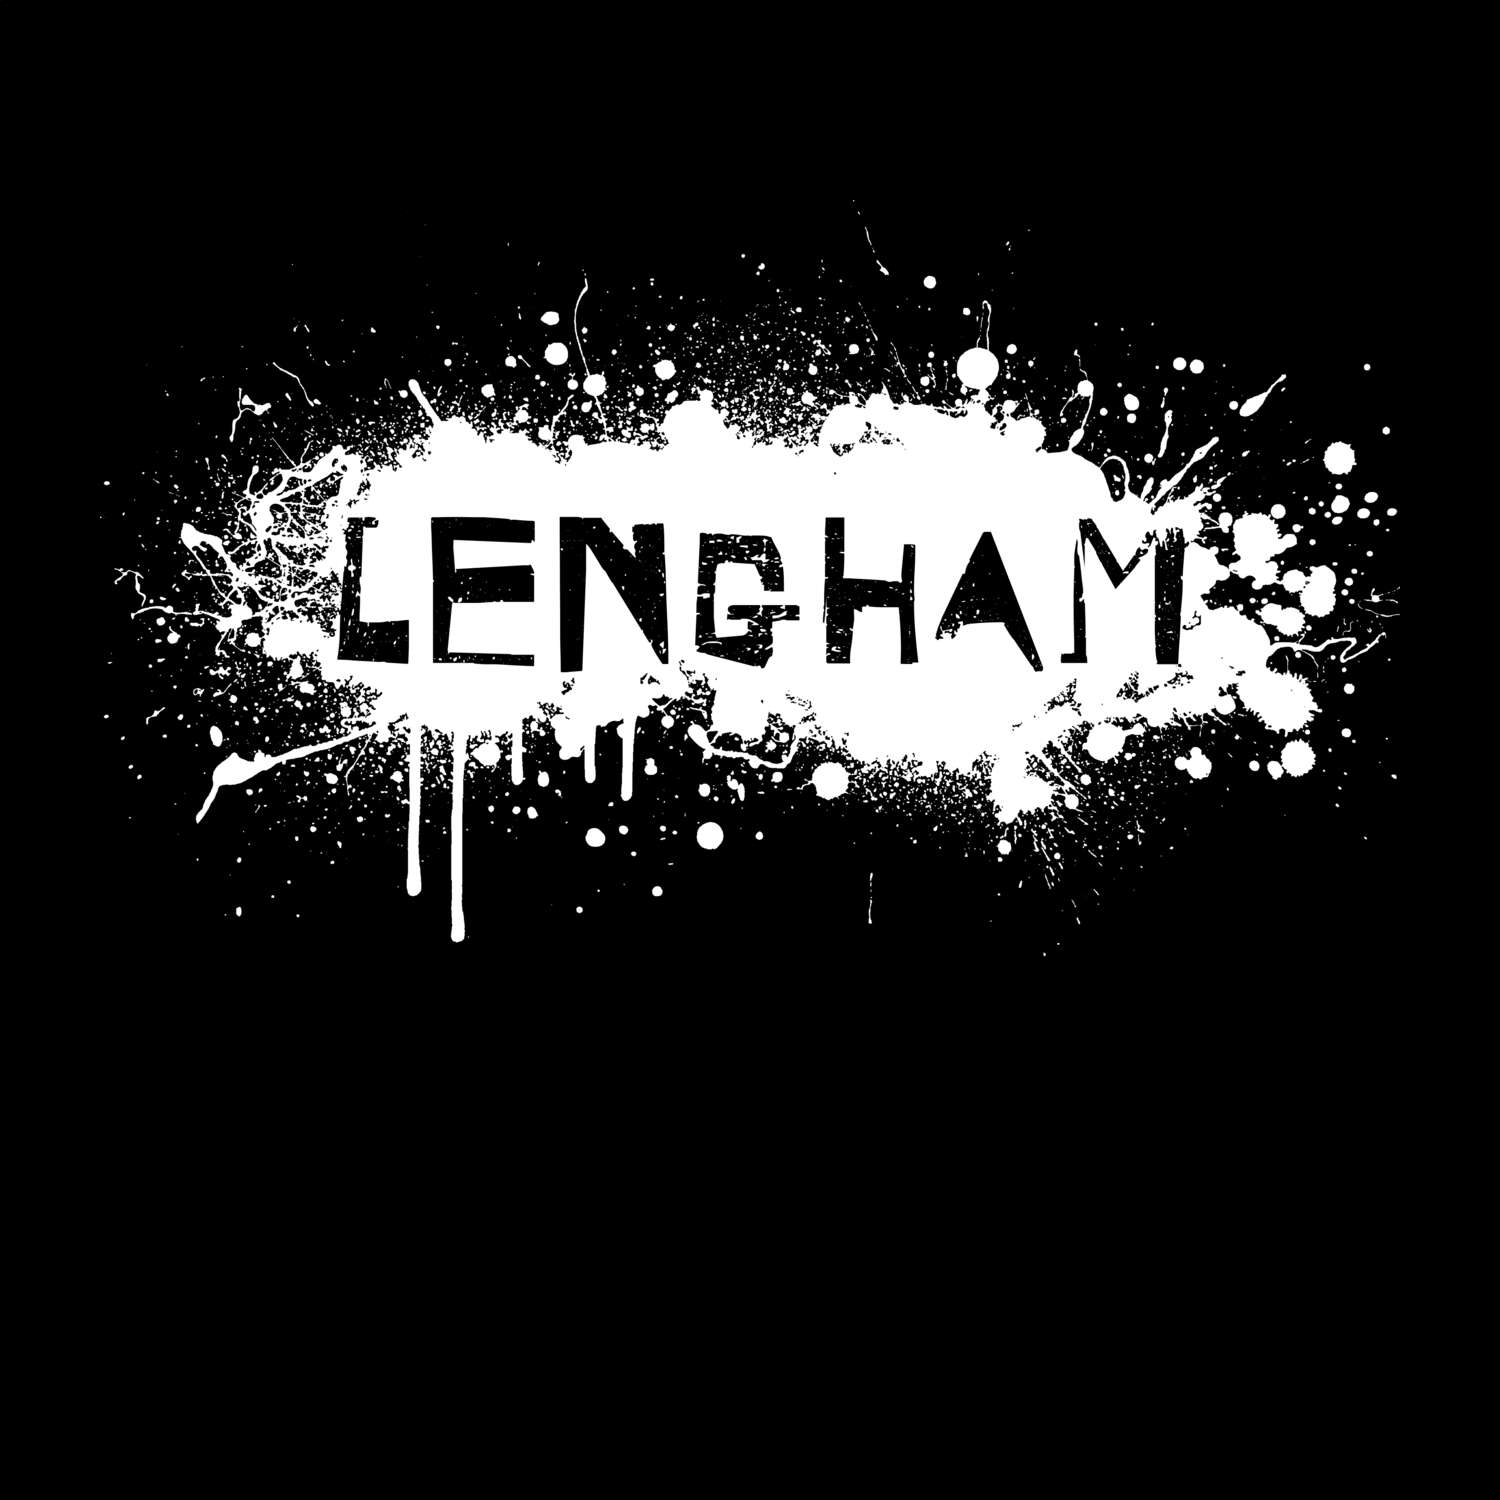 Lengham T-Shirt »Paint Splash Punk«